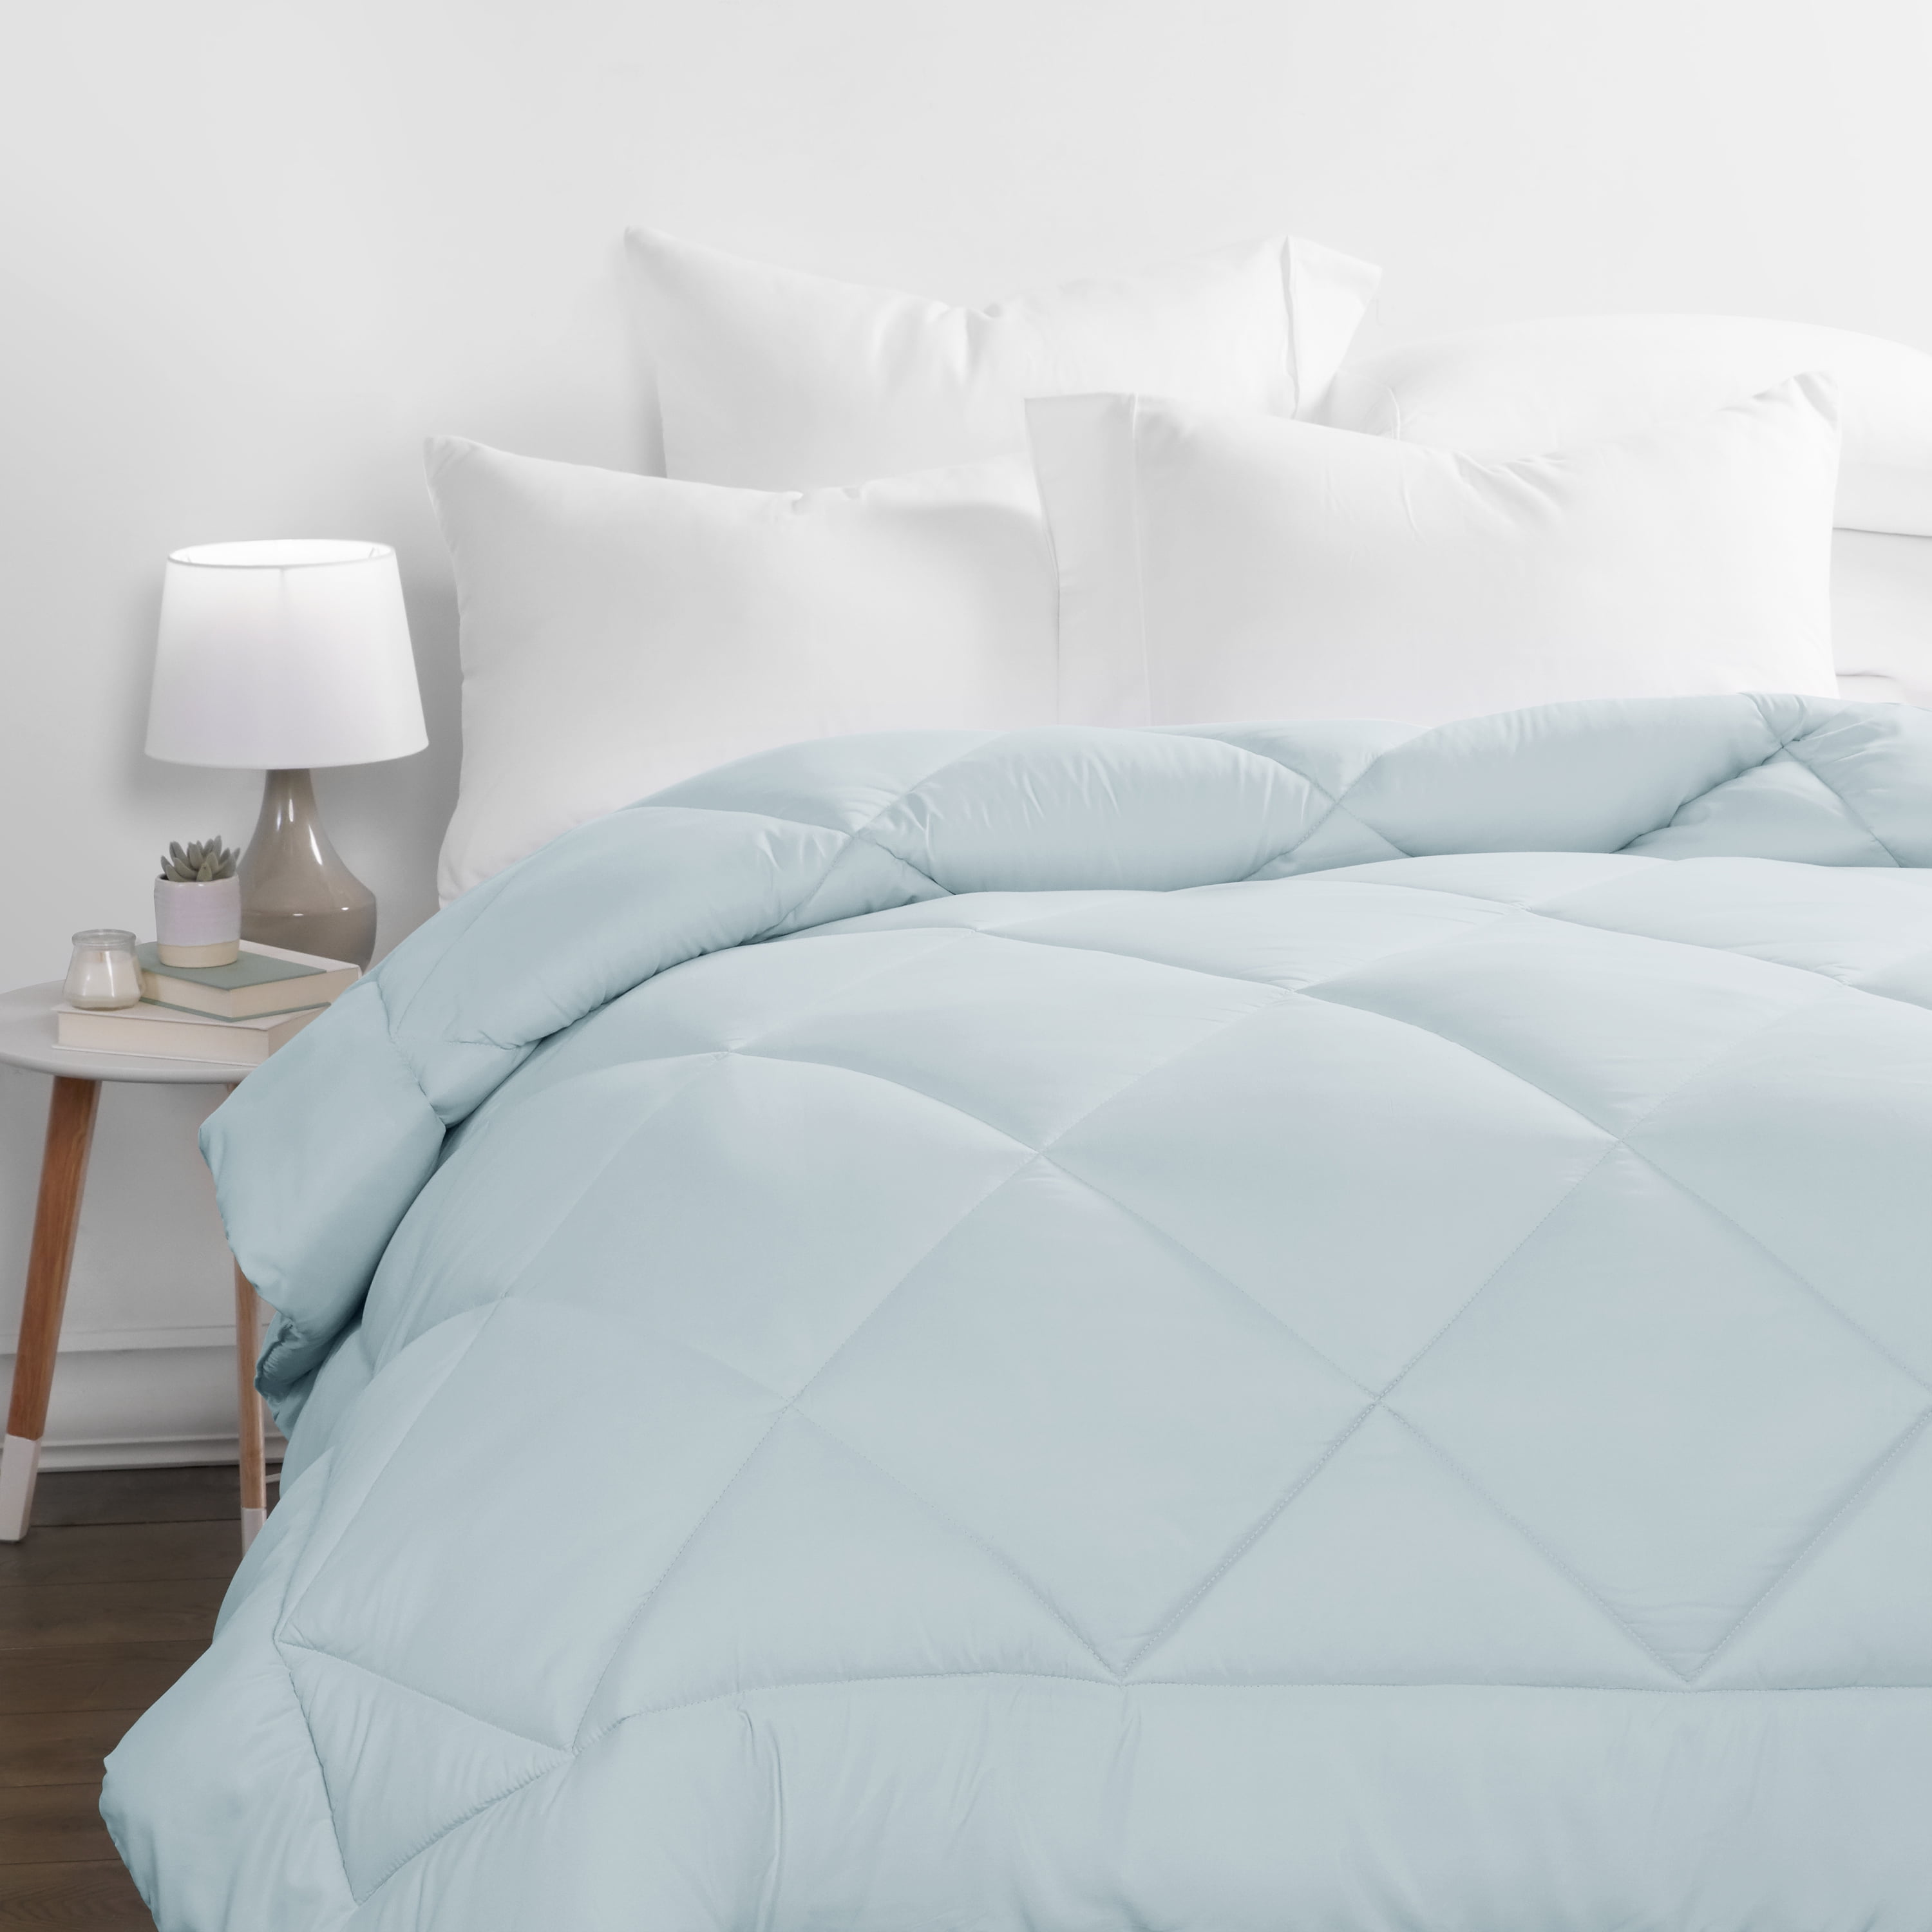 Noble Linen's Goose Down Alternative Comforter